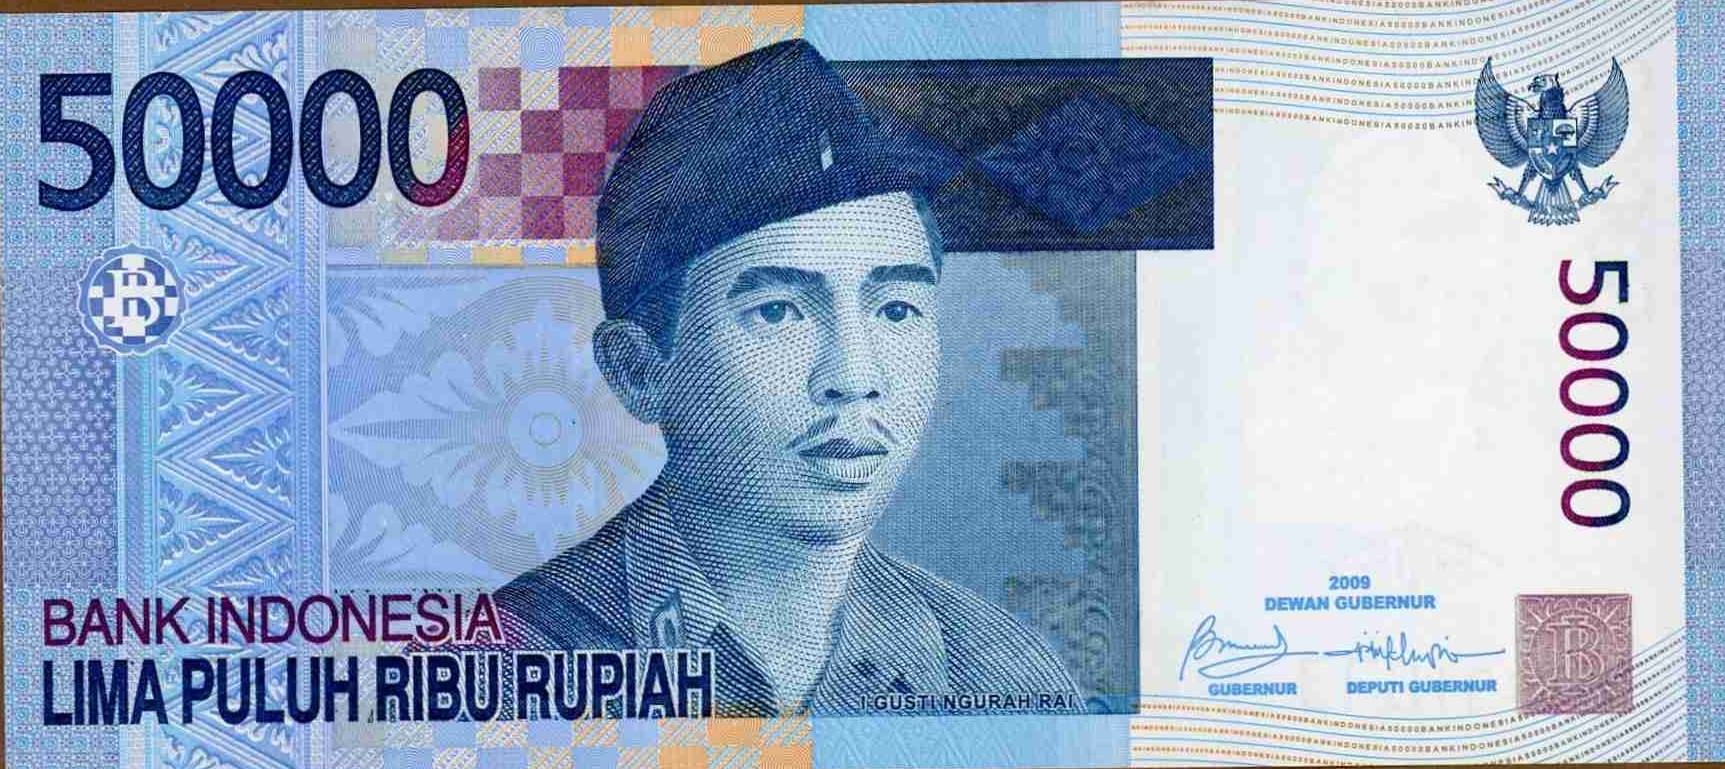 Indonesia 50000 rupiah 2009 face (2).jpg